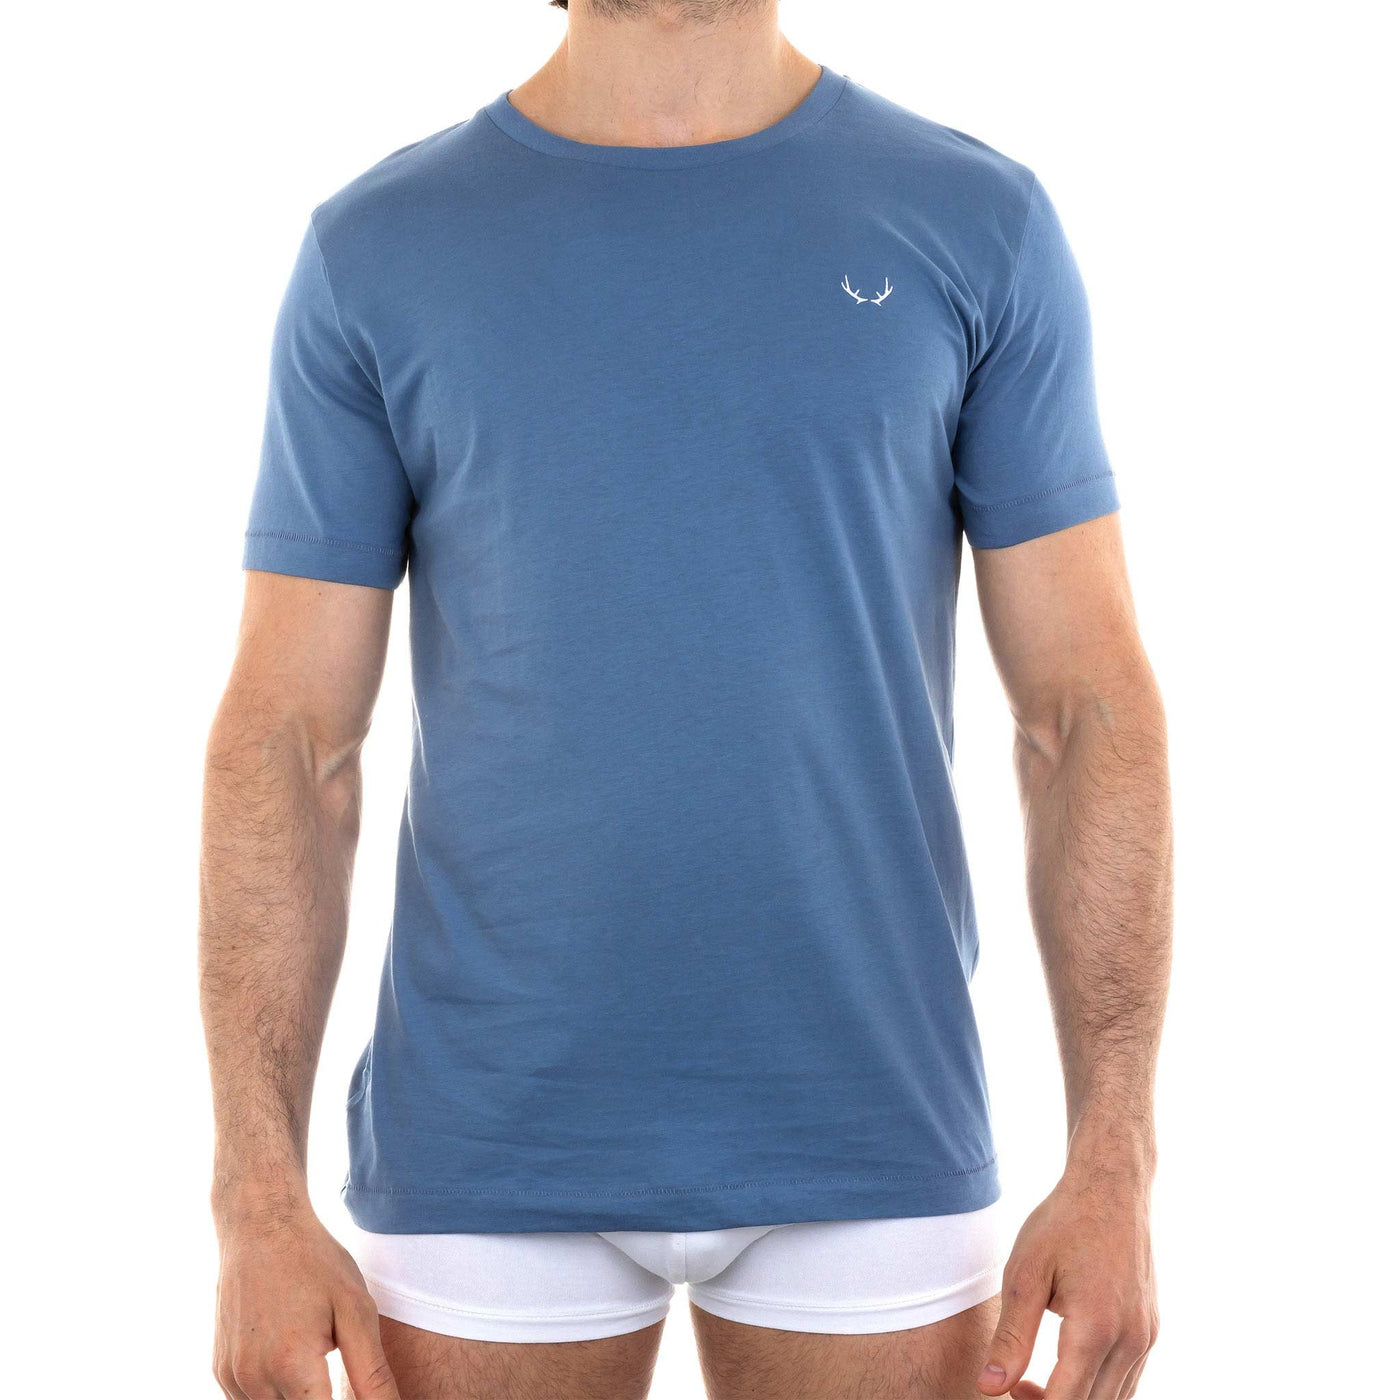 Moonlight blue organic cotton round neck t-shirt for men